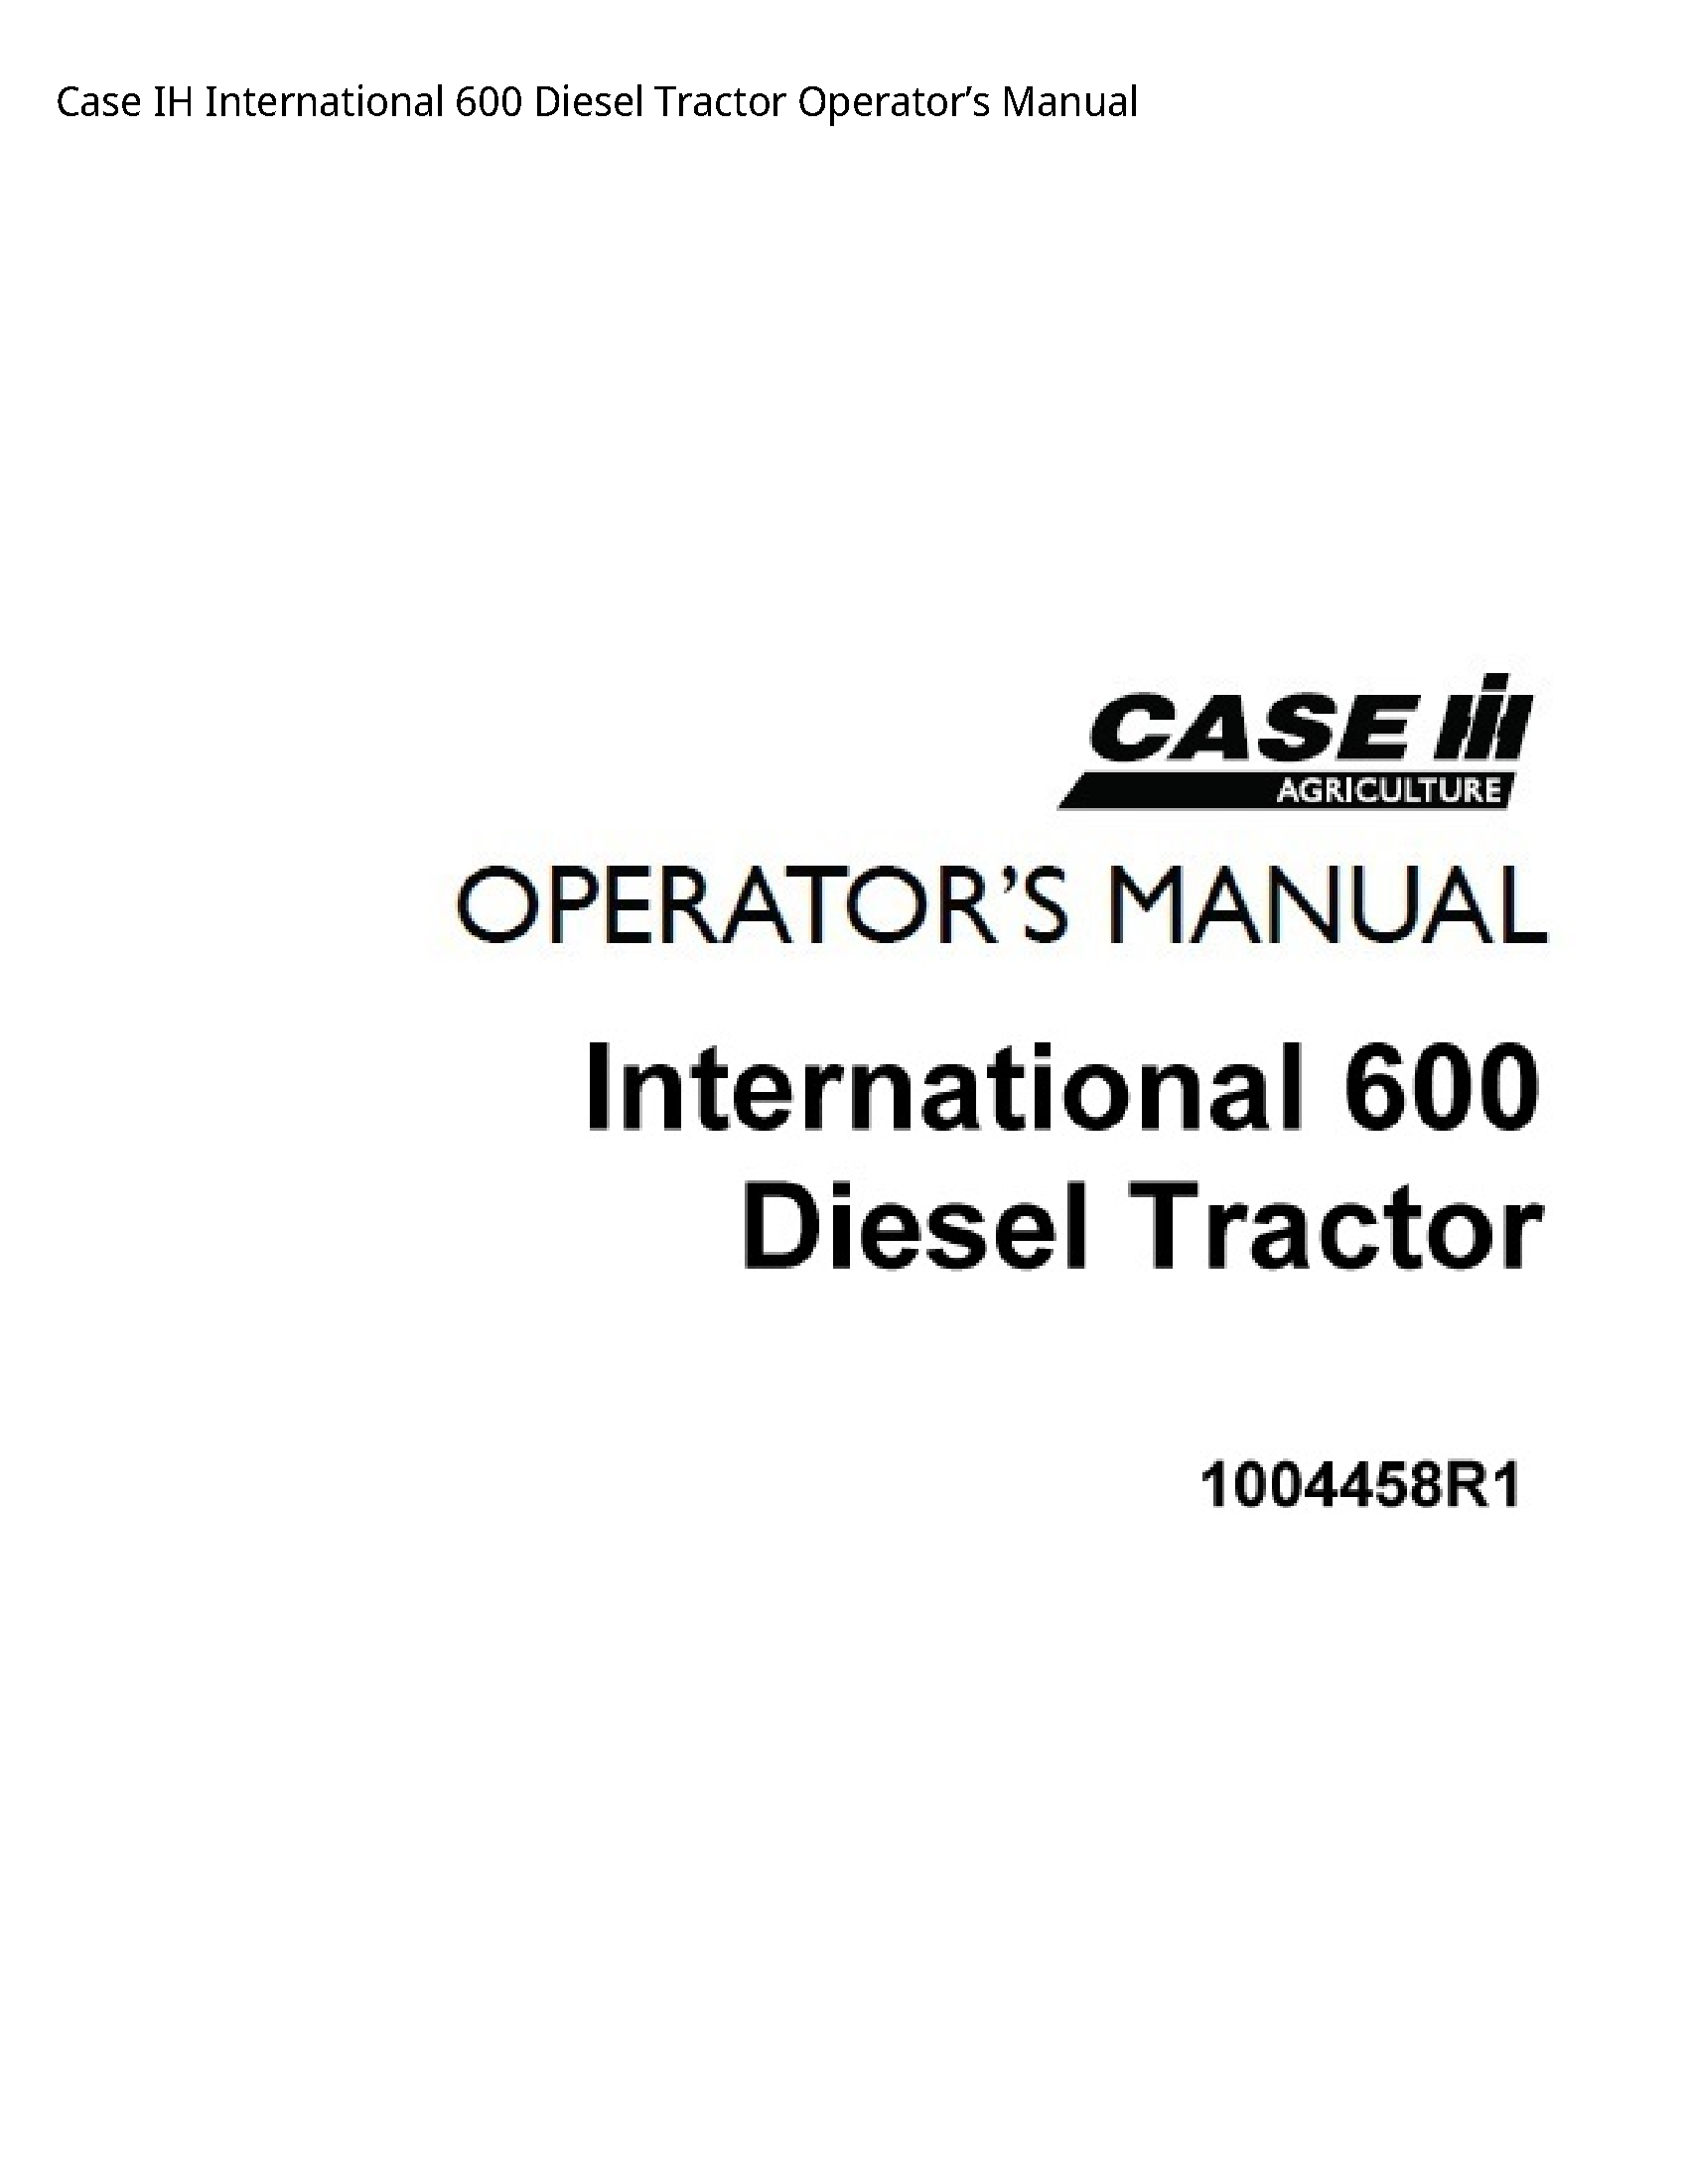 Case/Case IH 600 IH International Diesel Tractor Operator’s manual